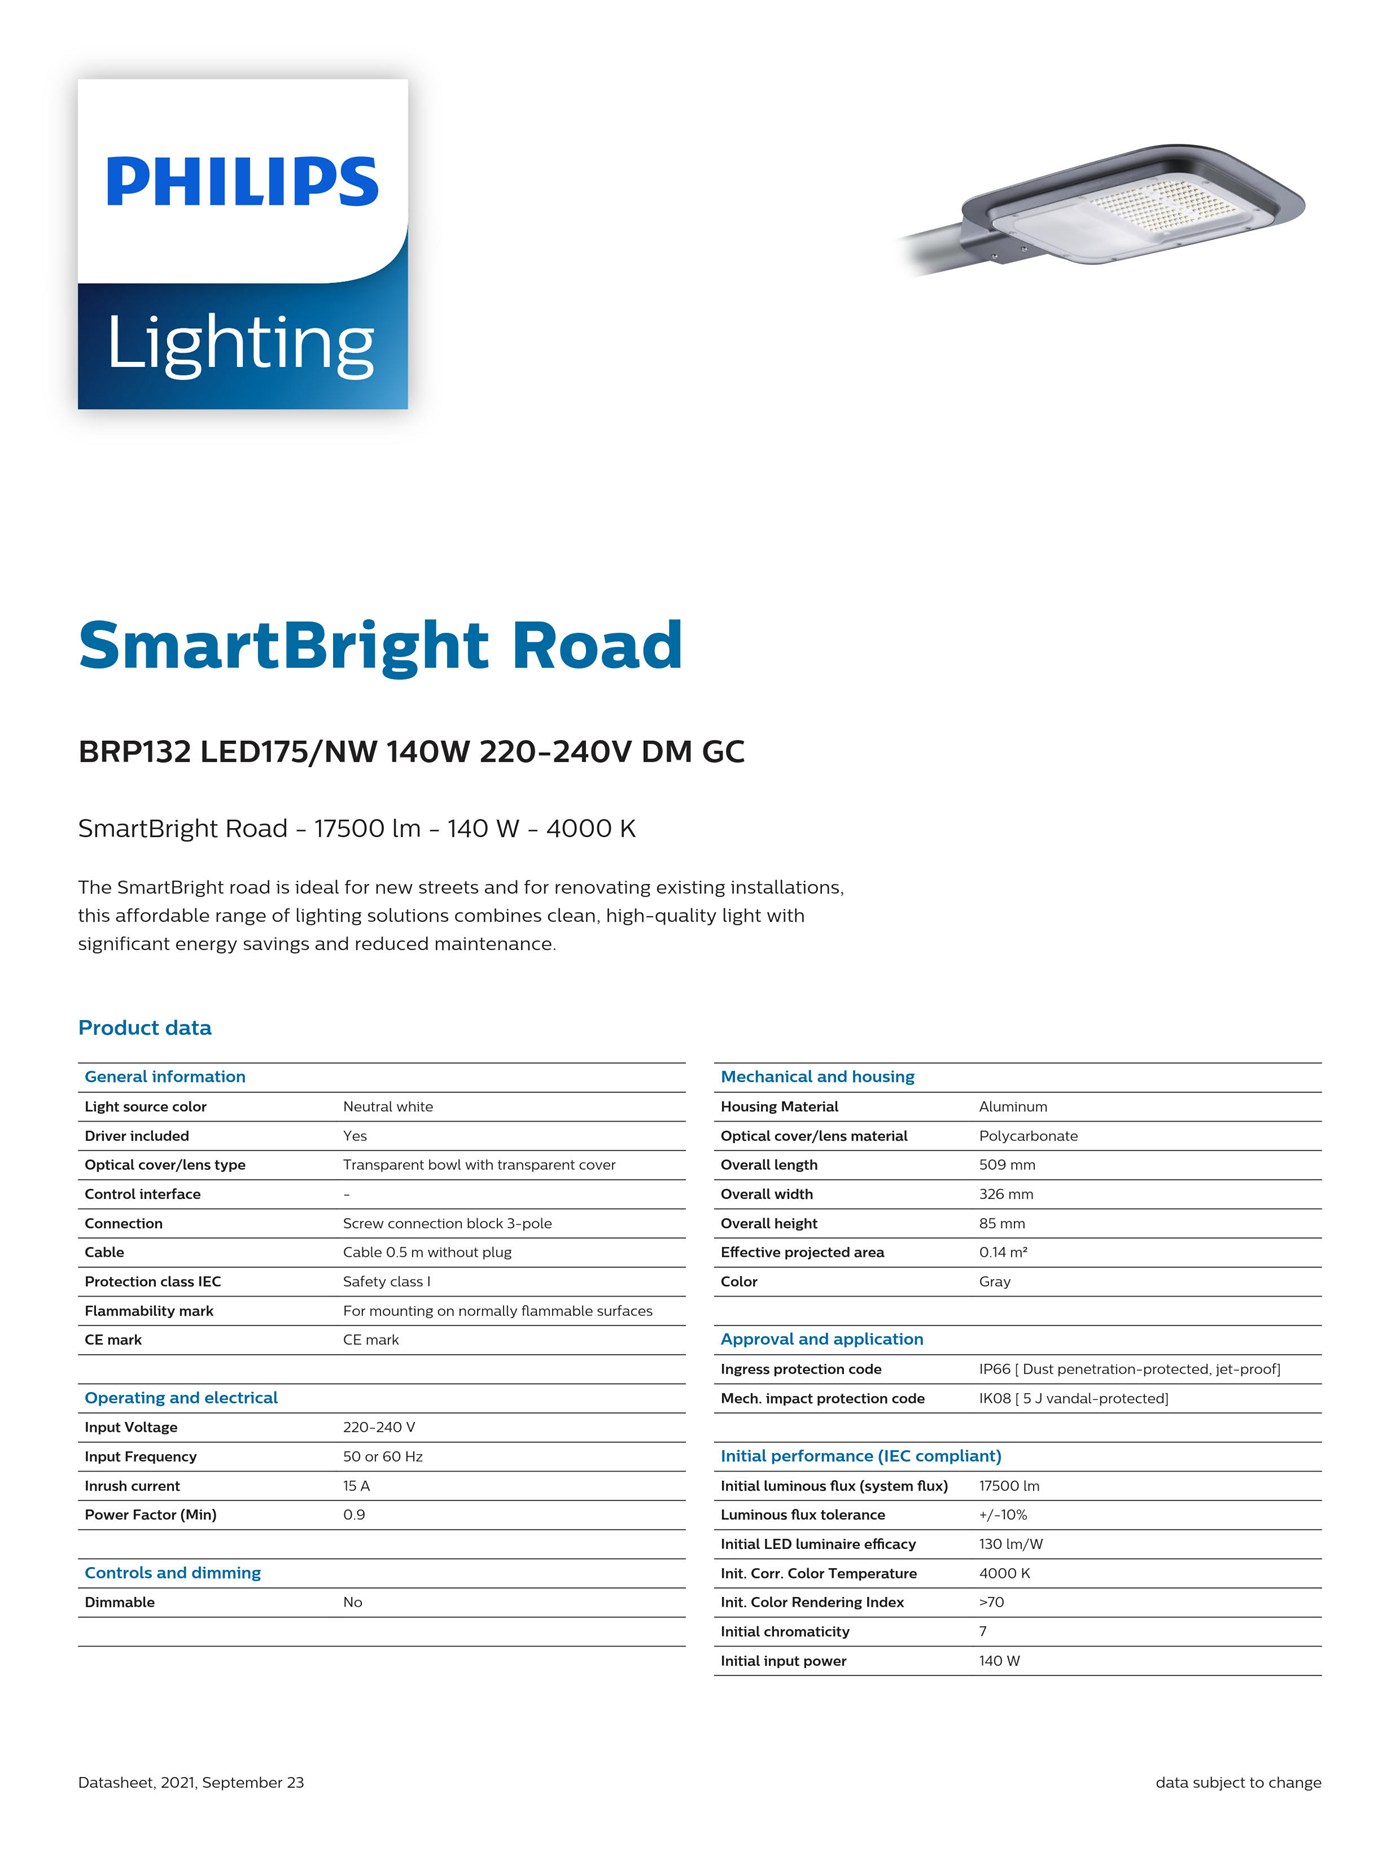 PHILIPS SmartBright Road BRP132 LED175/NW 140W 220-240V DM GC 911401675707